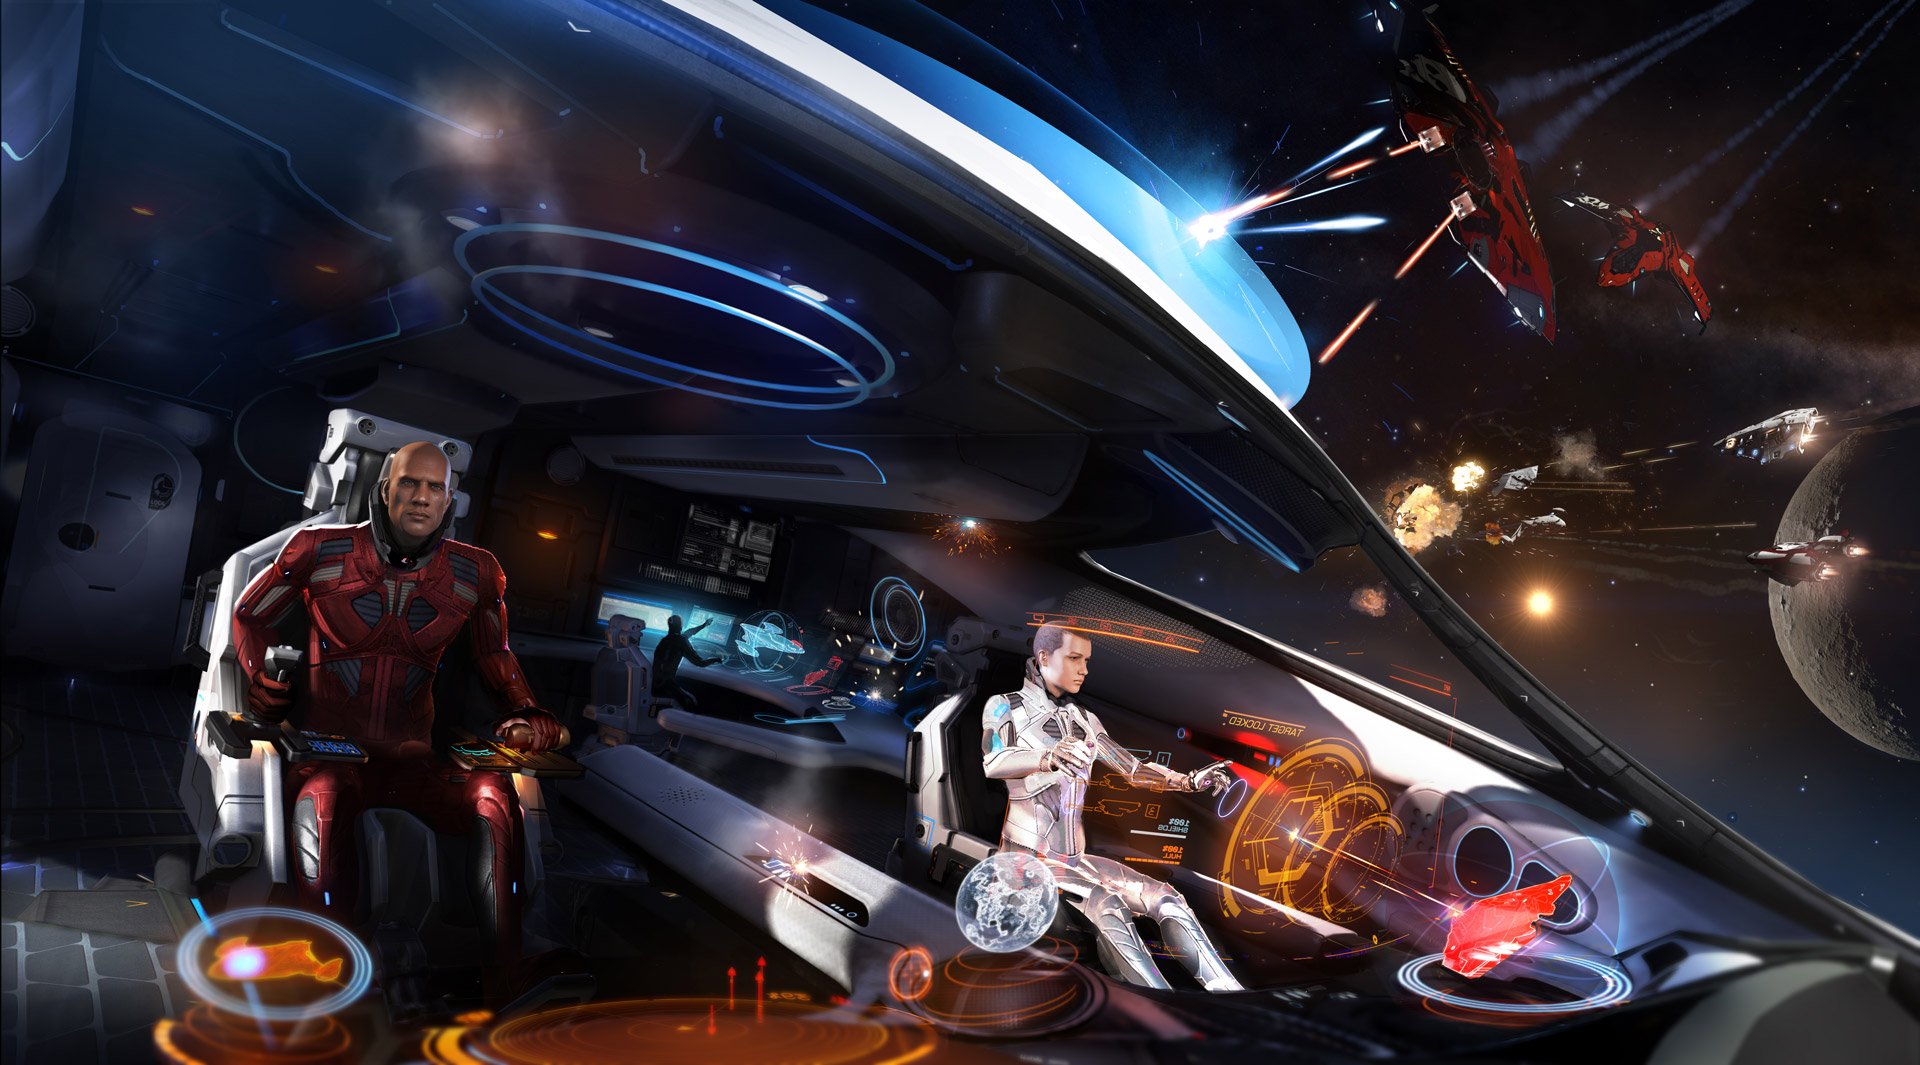 Dangerous: Commanders' Update 2.3 Brings Multi-crew Co-pilot Feature